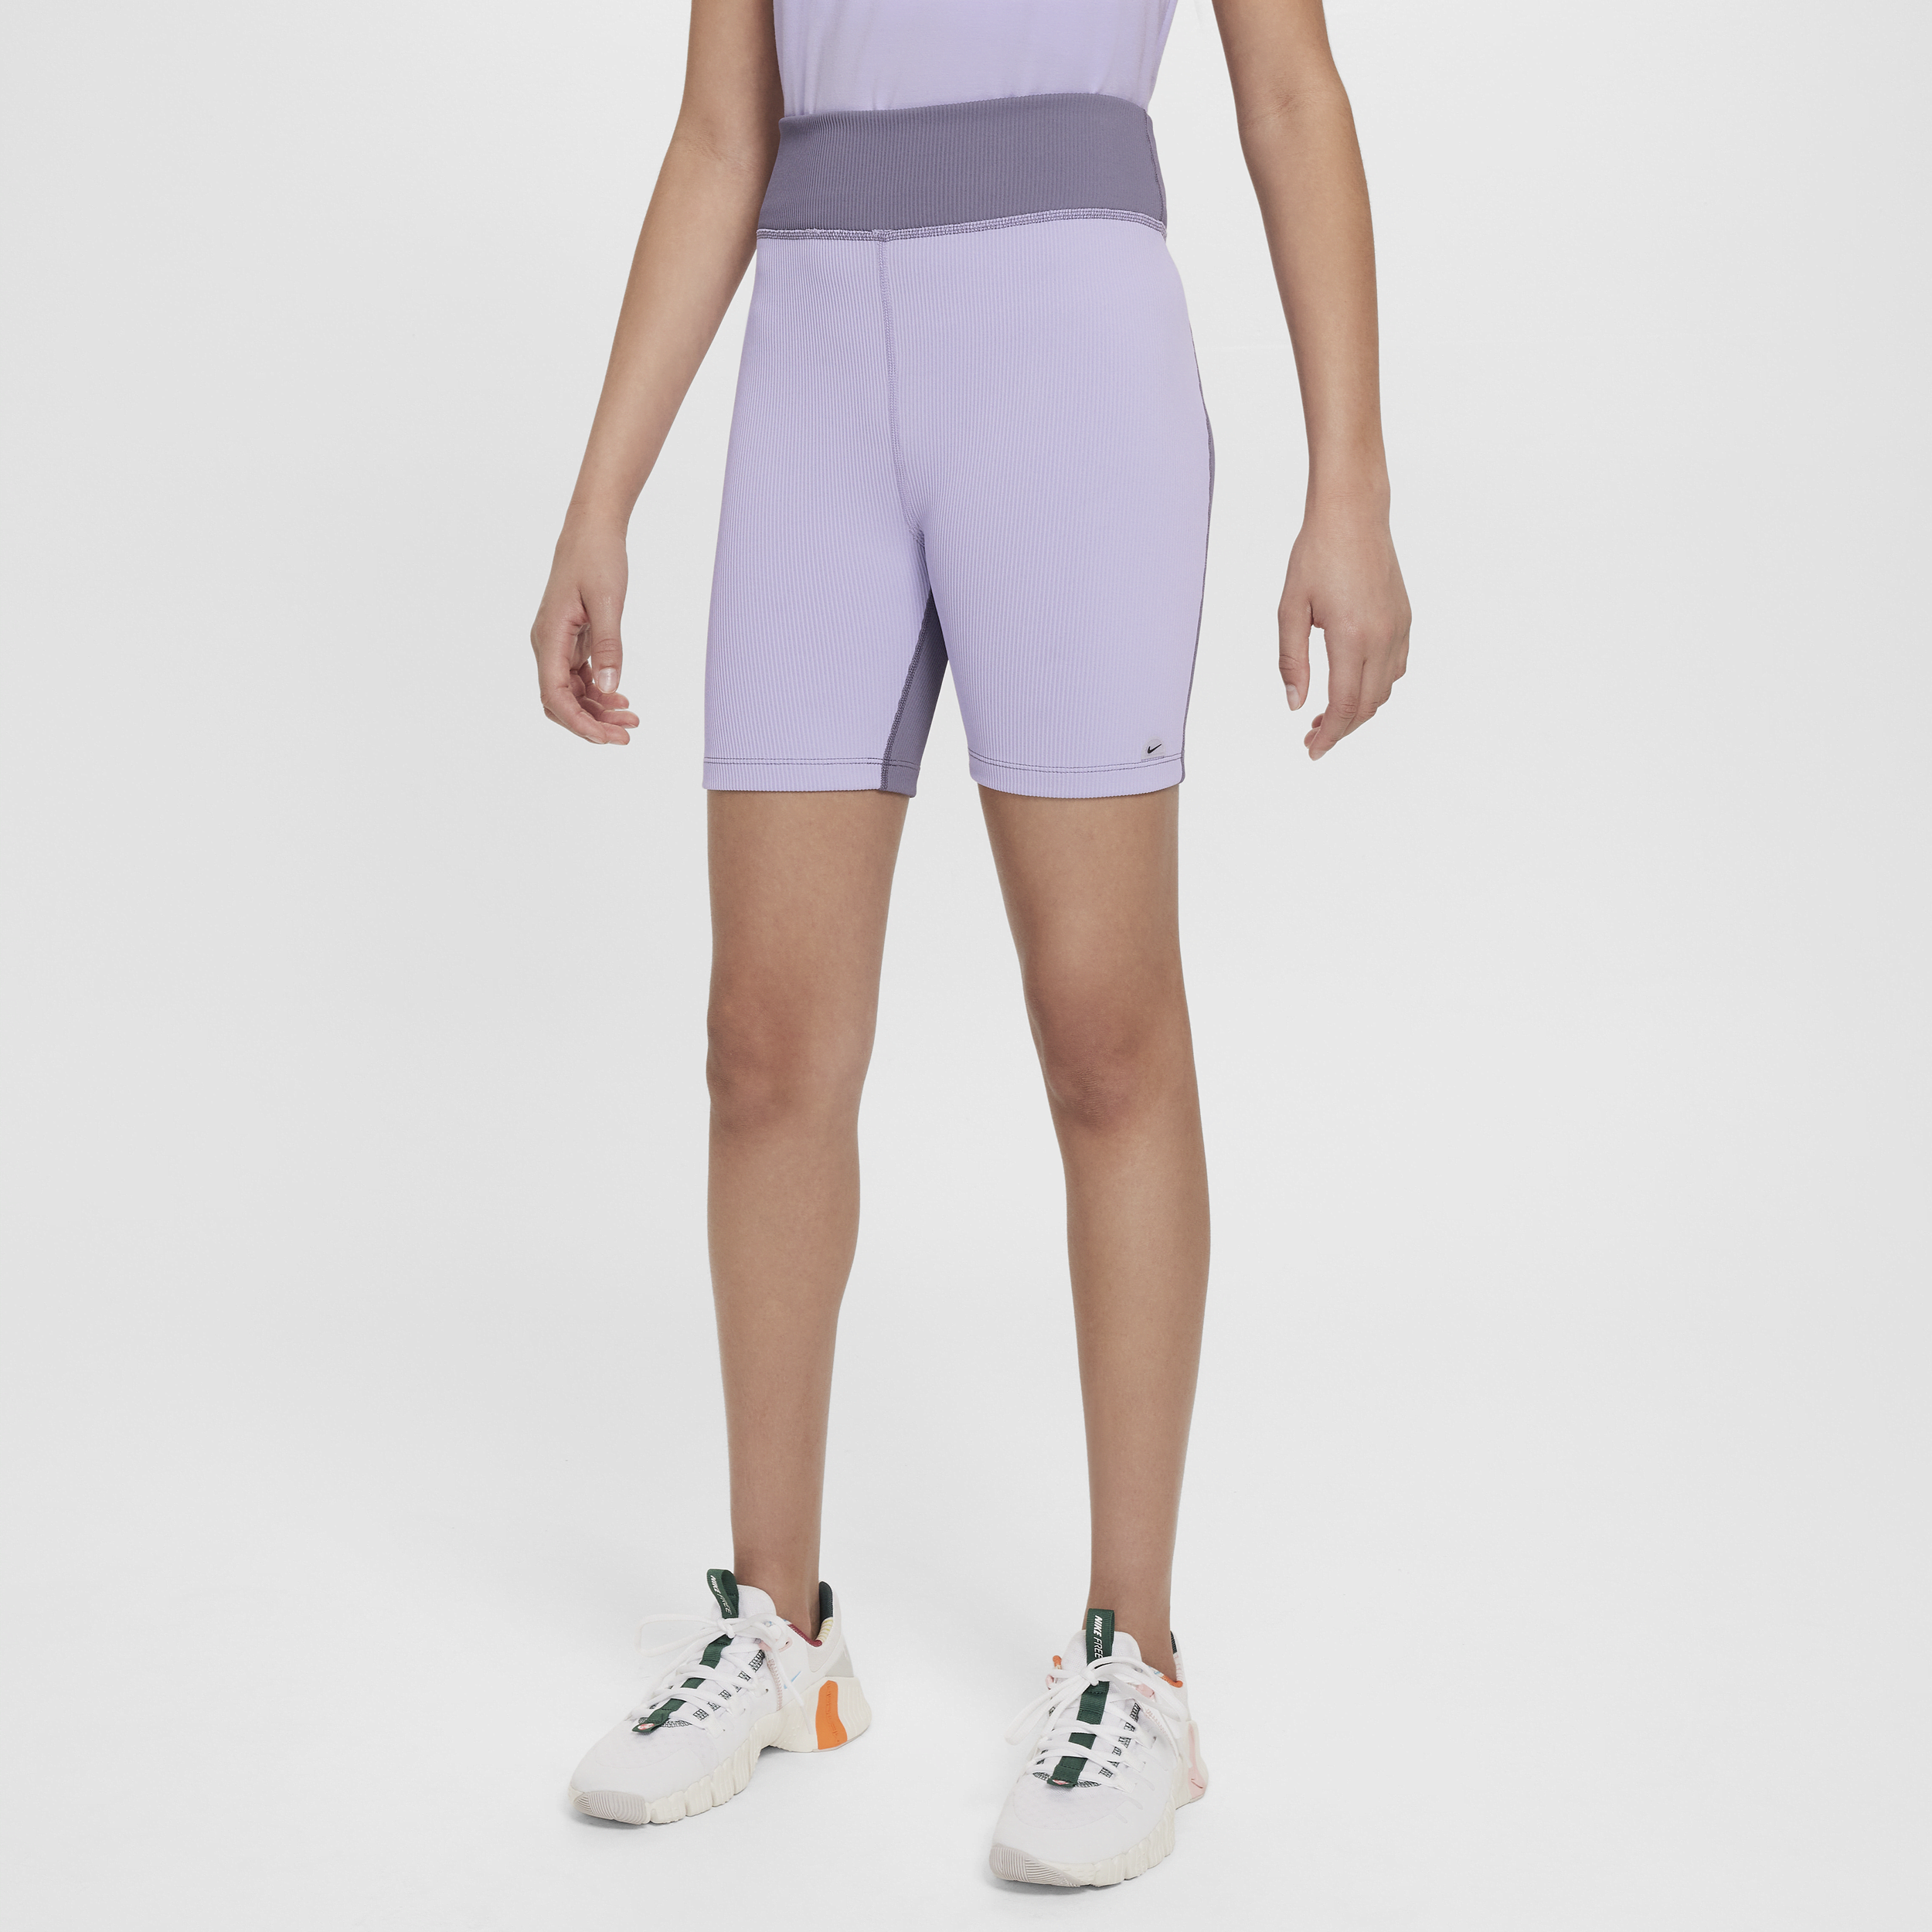 Nike One Dri-FIT-cykelshorts til piger - lilla